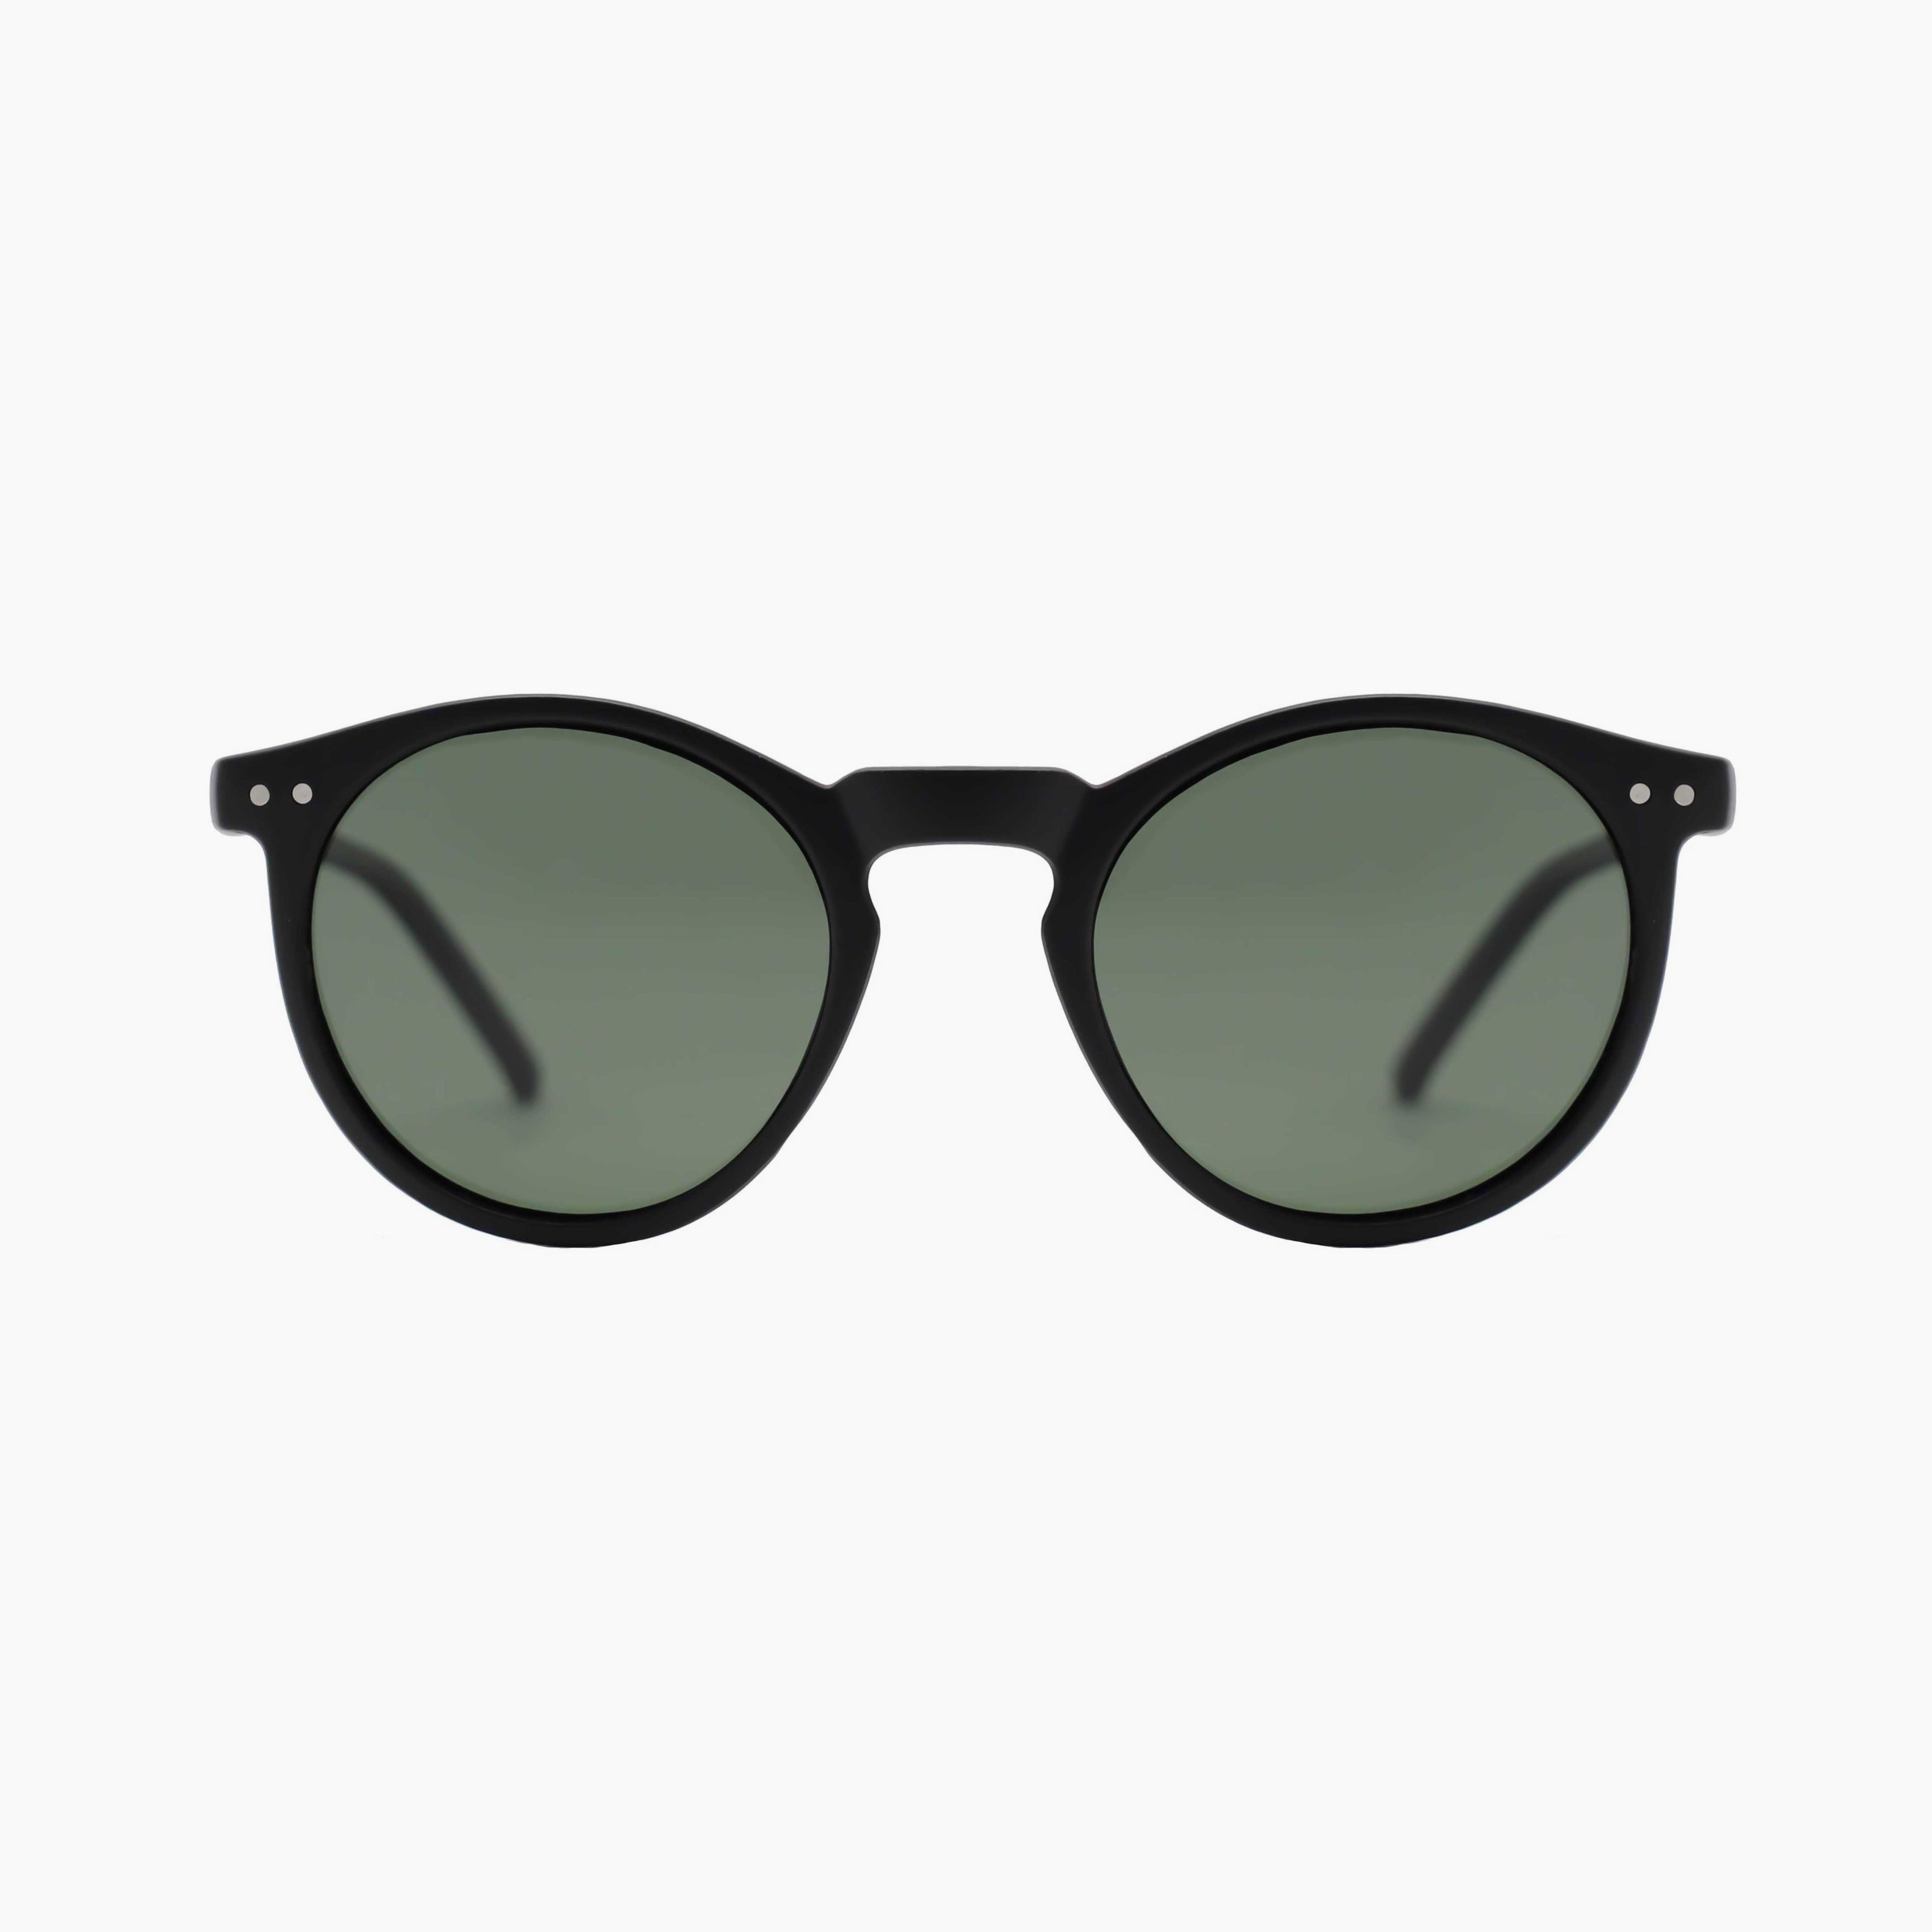 Wren +Polarized Sunglasses